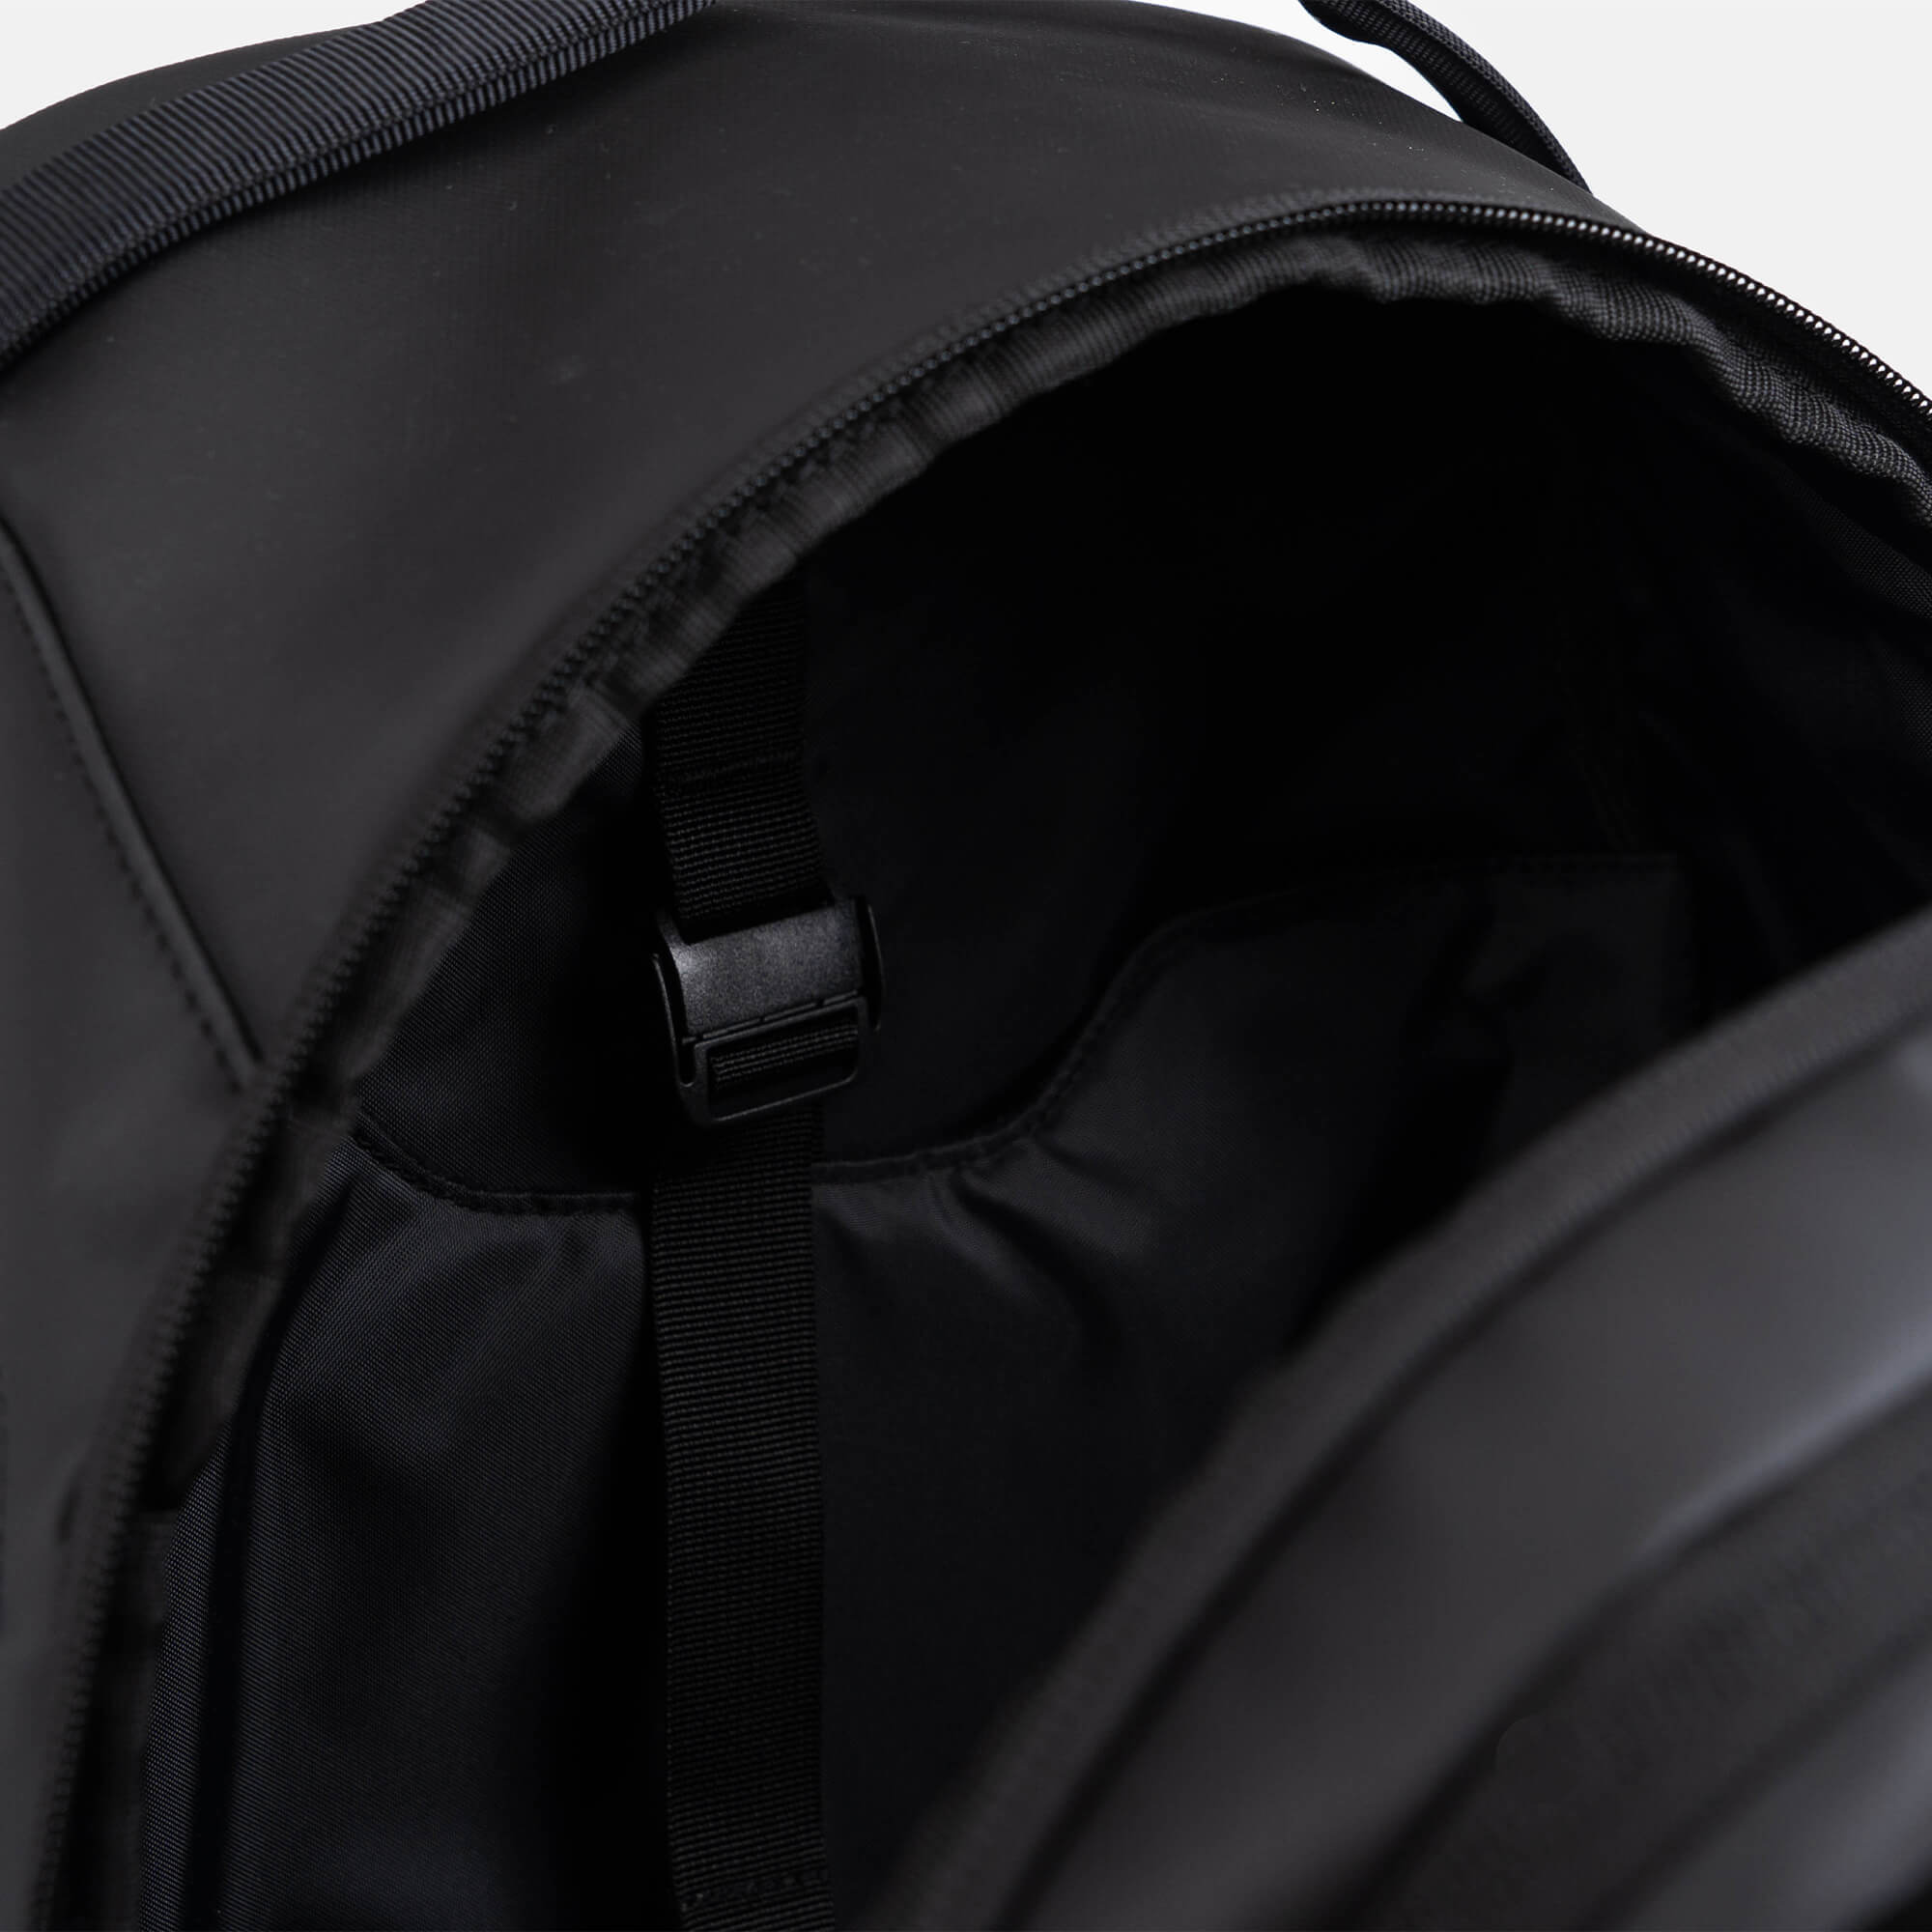 gravestone backpack onyx closeup